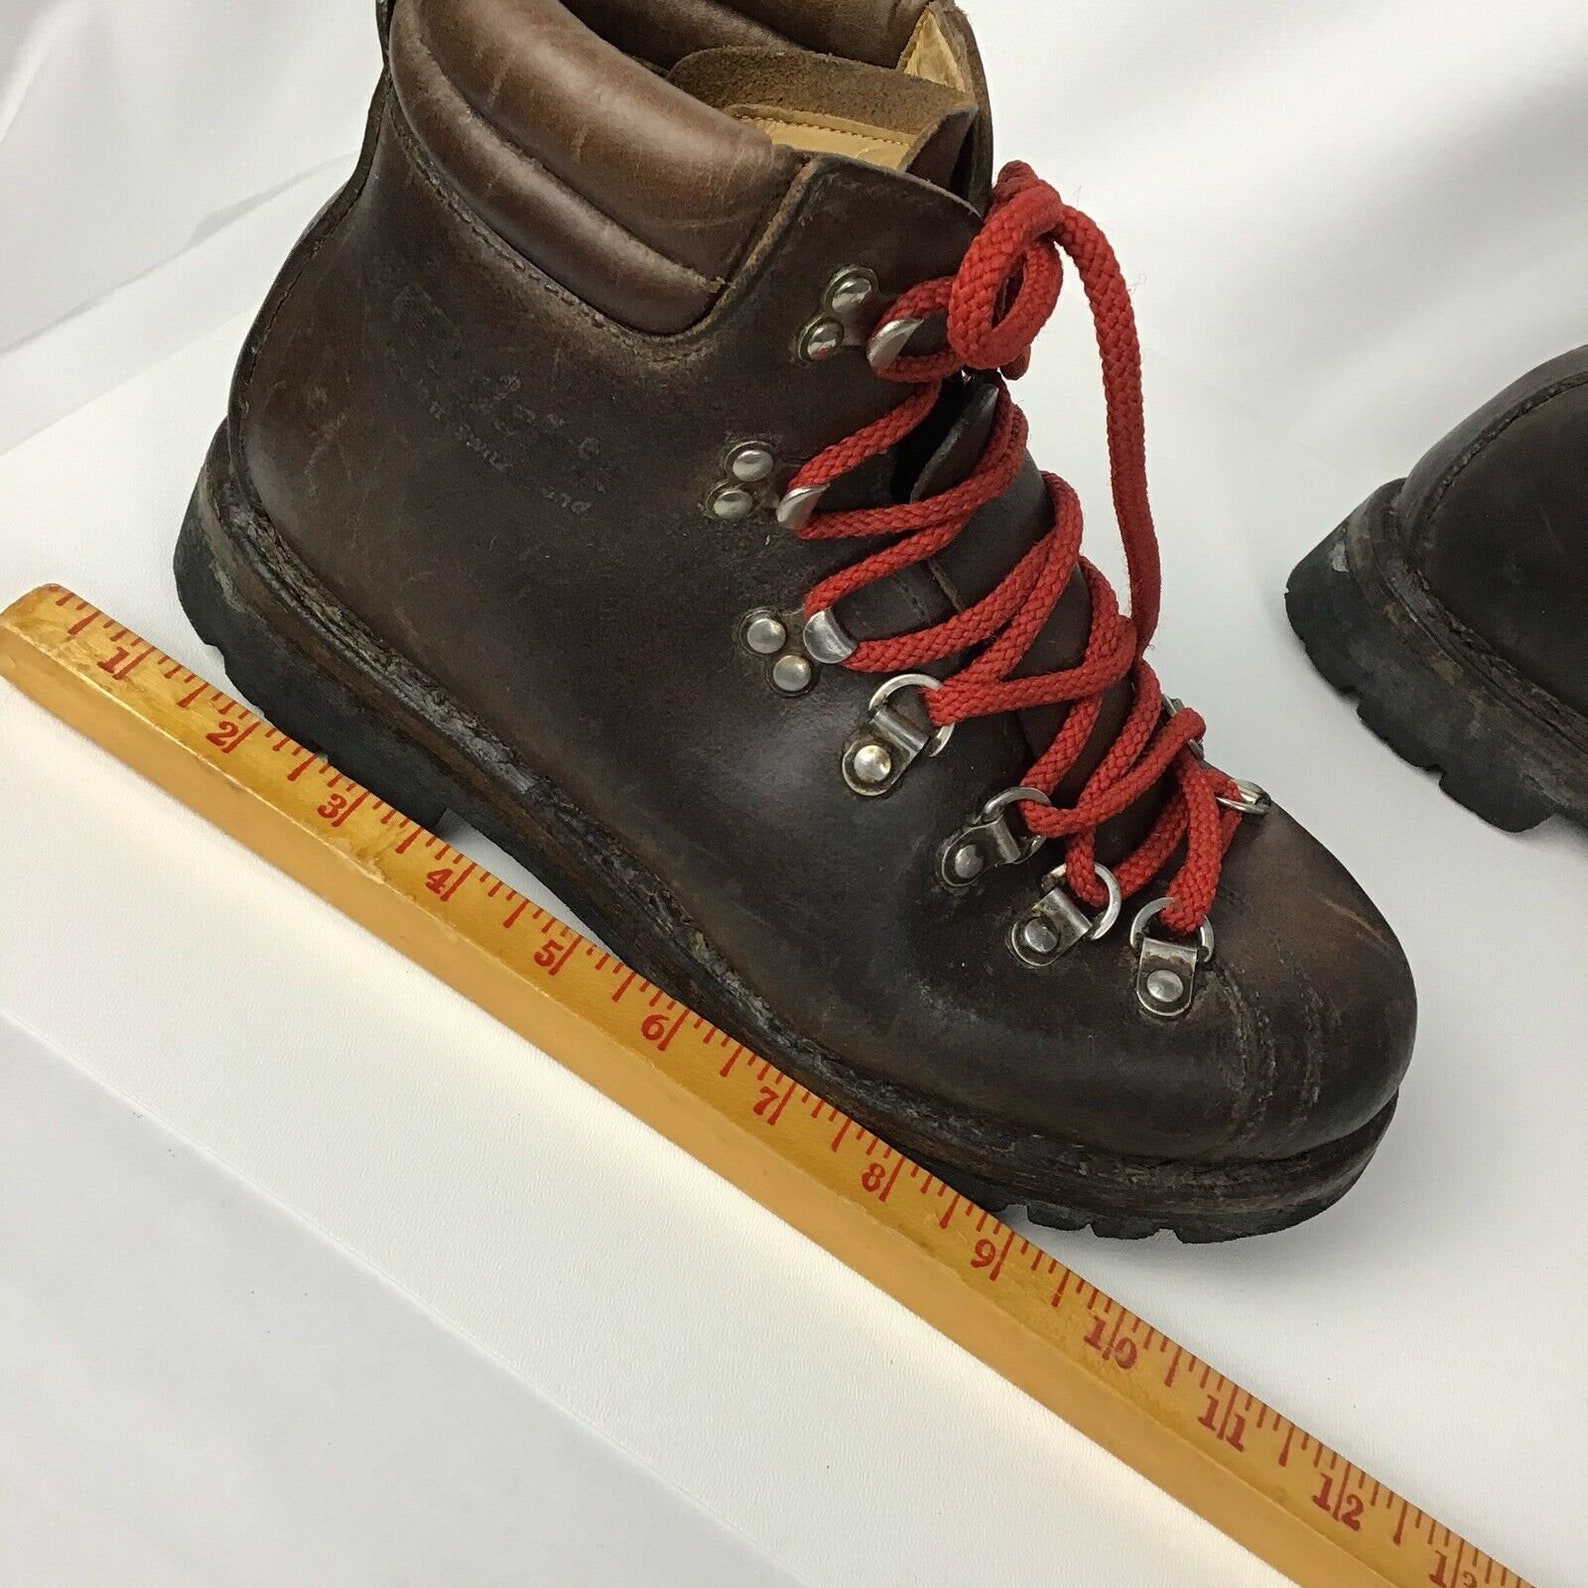 Raichle Hiking Boots 6.5M EU Brown Leather Vibram Soles | Etsy